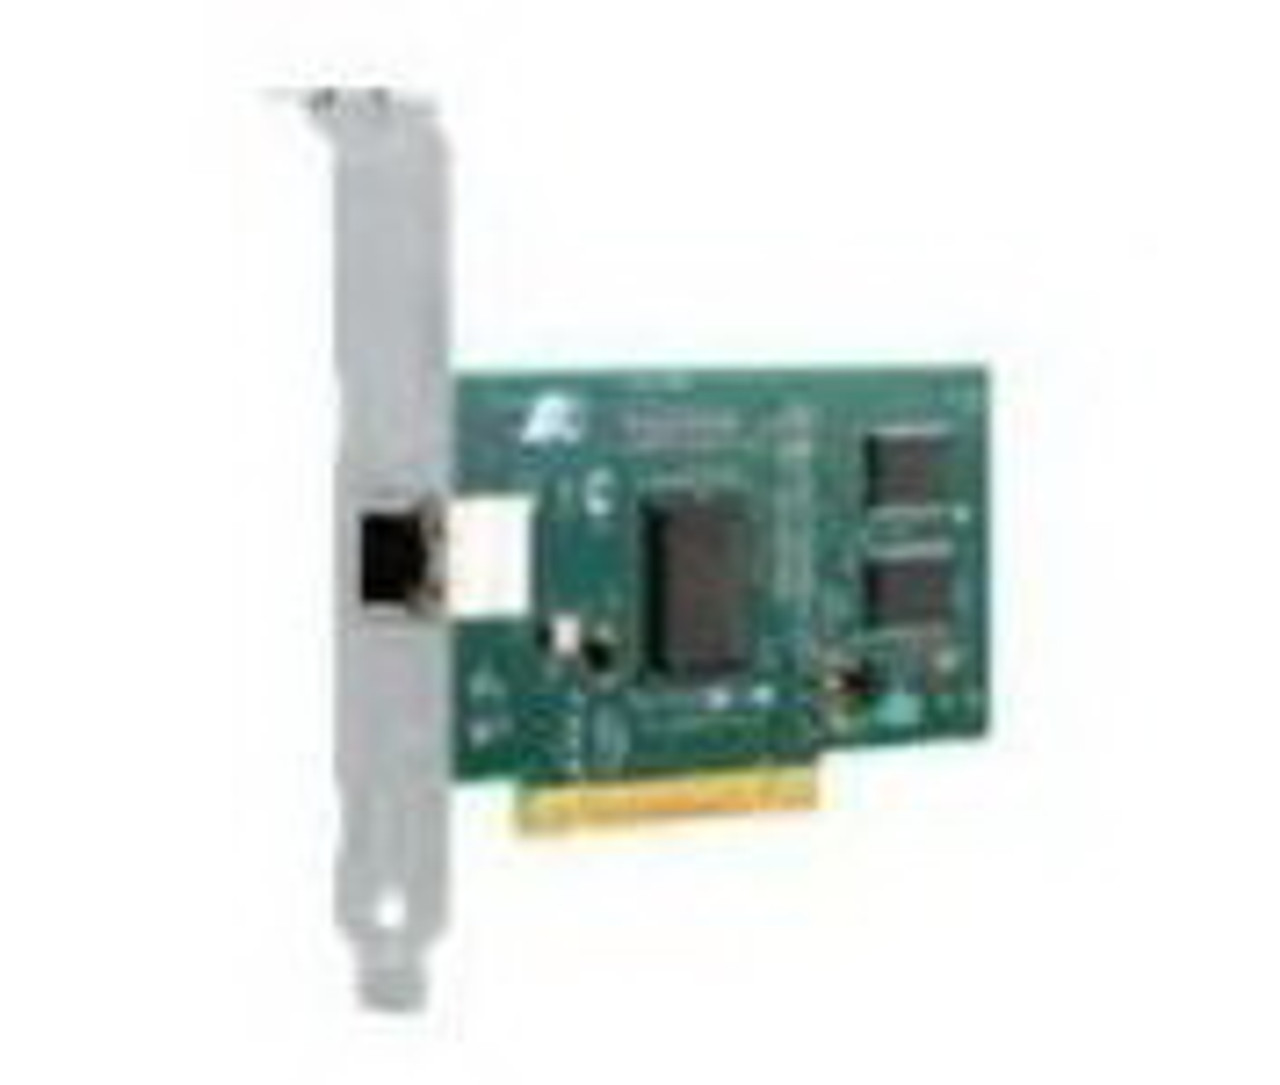 AT-2750TX-901 Allied Telesis 10/100Base-TX 1 x RJ-45 PCI Copper Network Interface Card